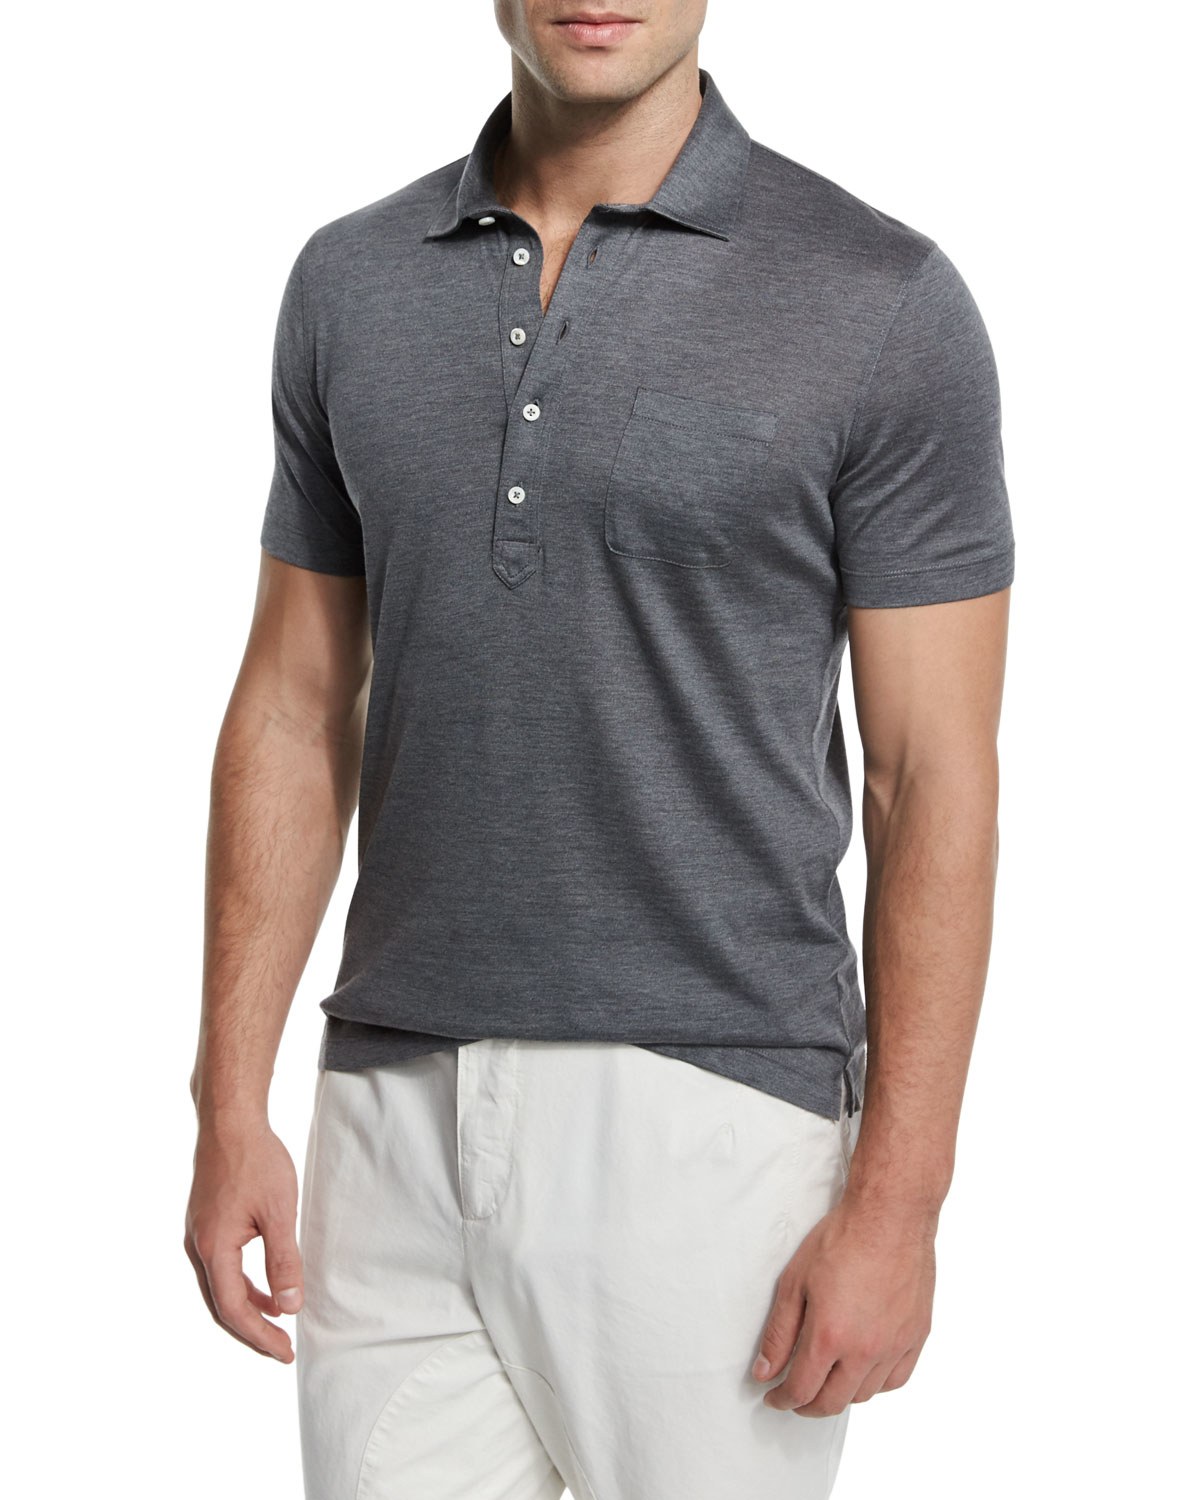 Lyst - Brunello Cucinelli Silk/cotton Short-sleeve Polo Shirt in Gray ...